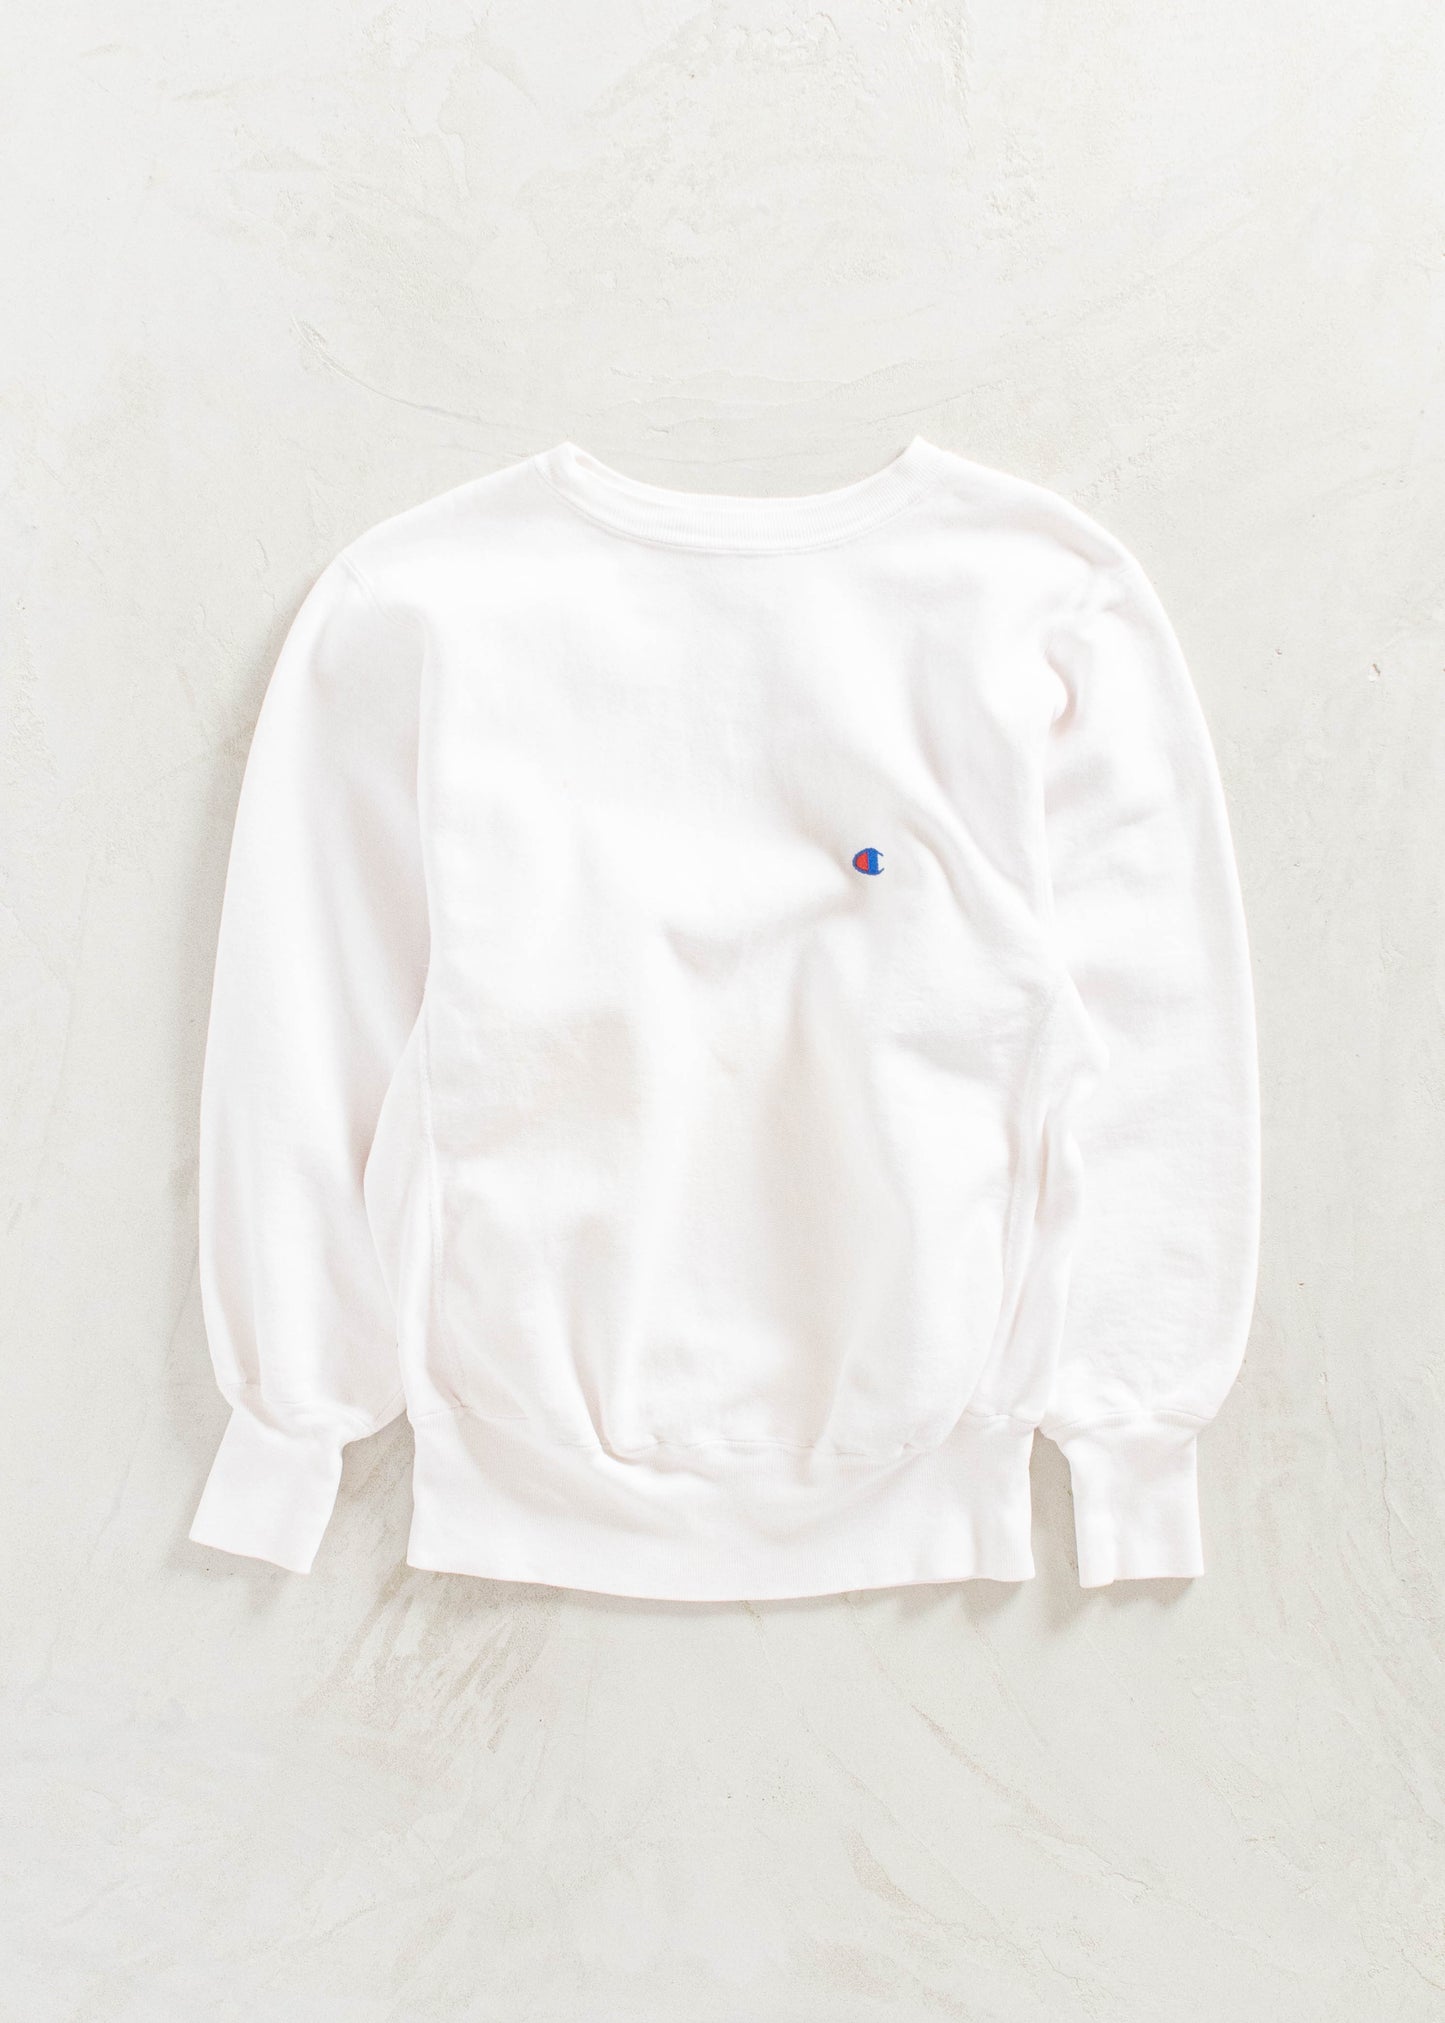 Vintage 1990s Champion Reverse Weave White Sweatshirt Size S/M